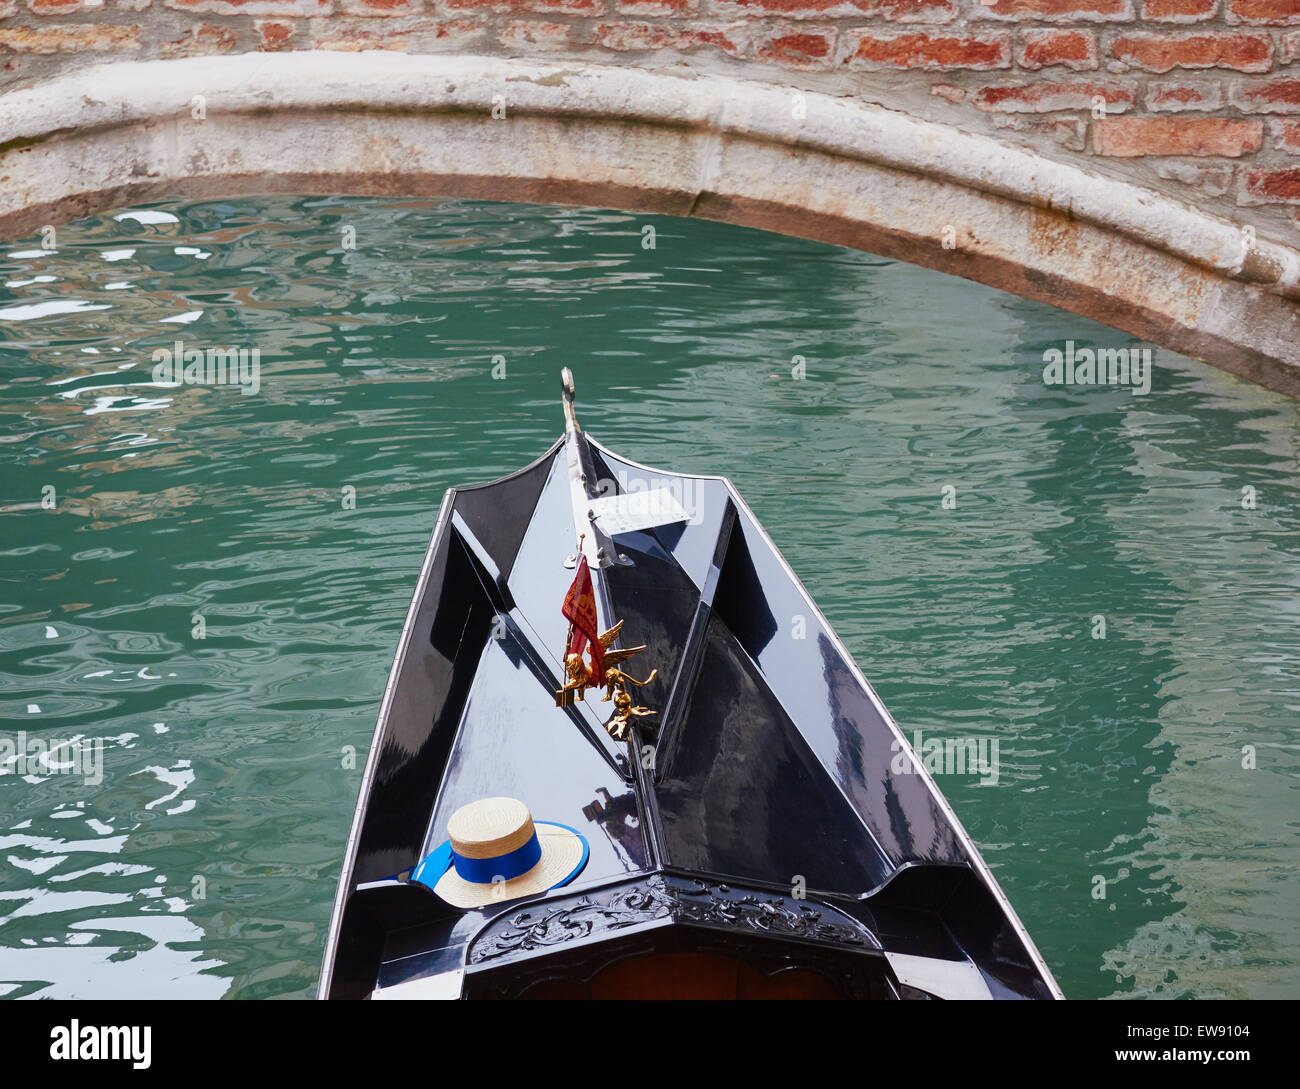 Gondola passing under a bridge with the Venetian flag and straw hat of the gondolier Venice Veneto Italy Europe Stock Photo